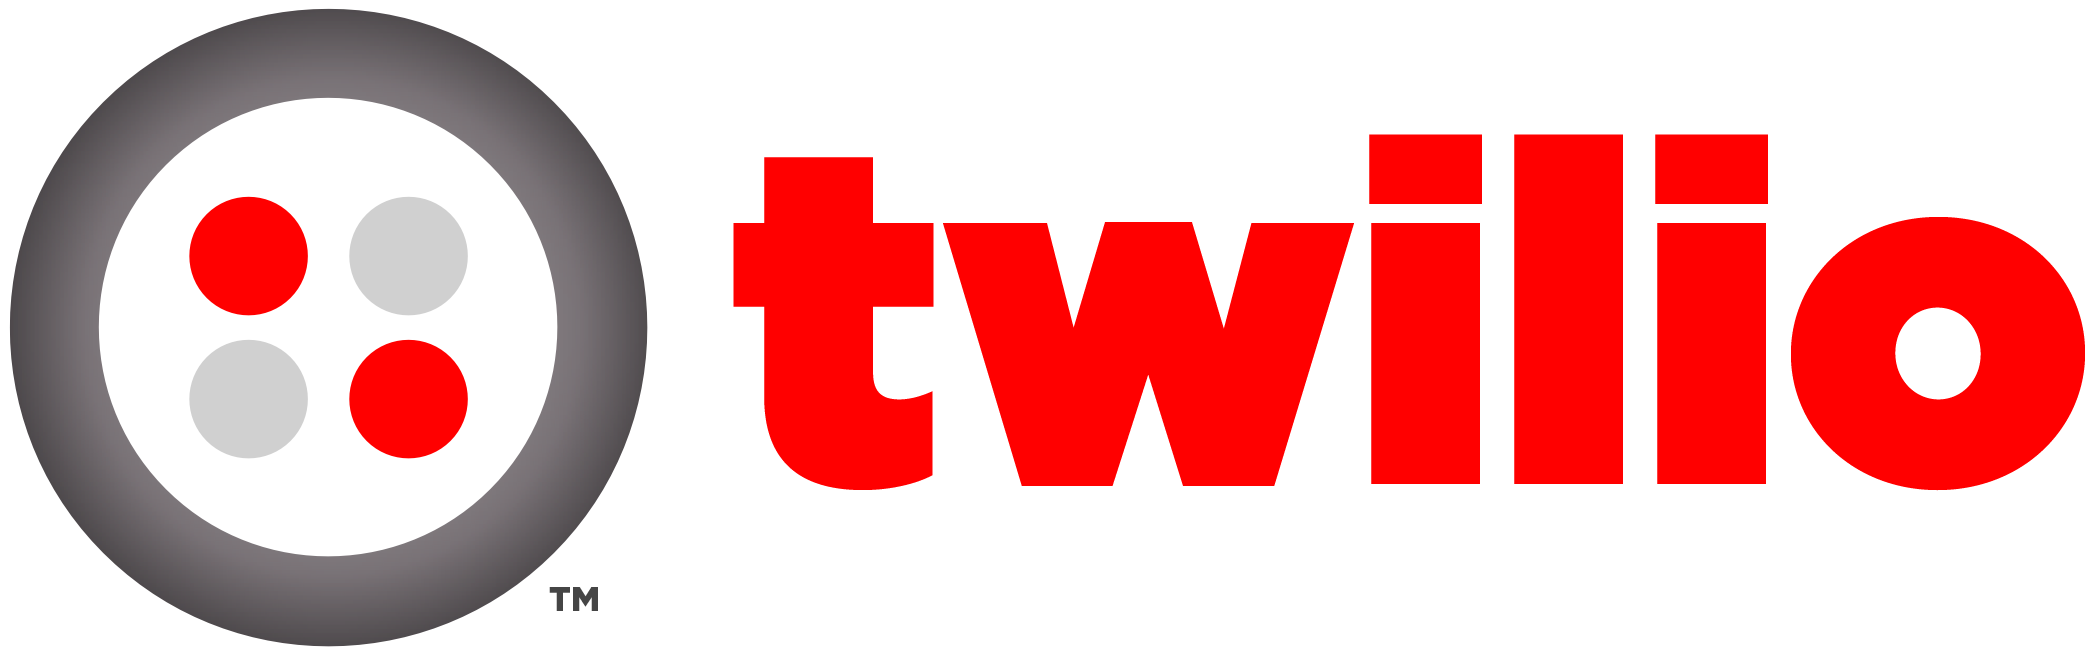 twilio-logo-2100x650.png